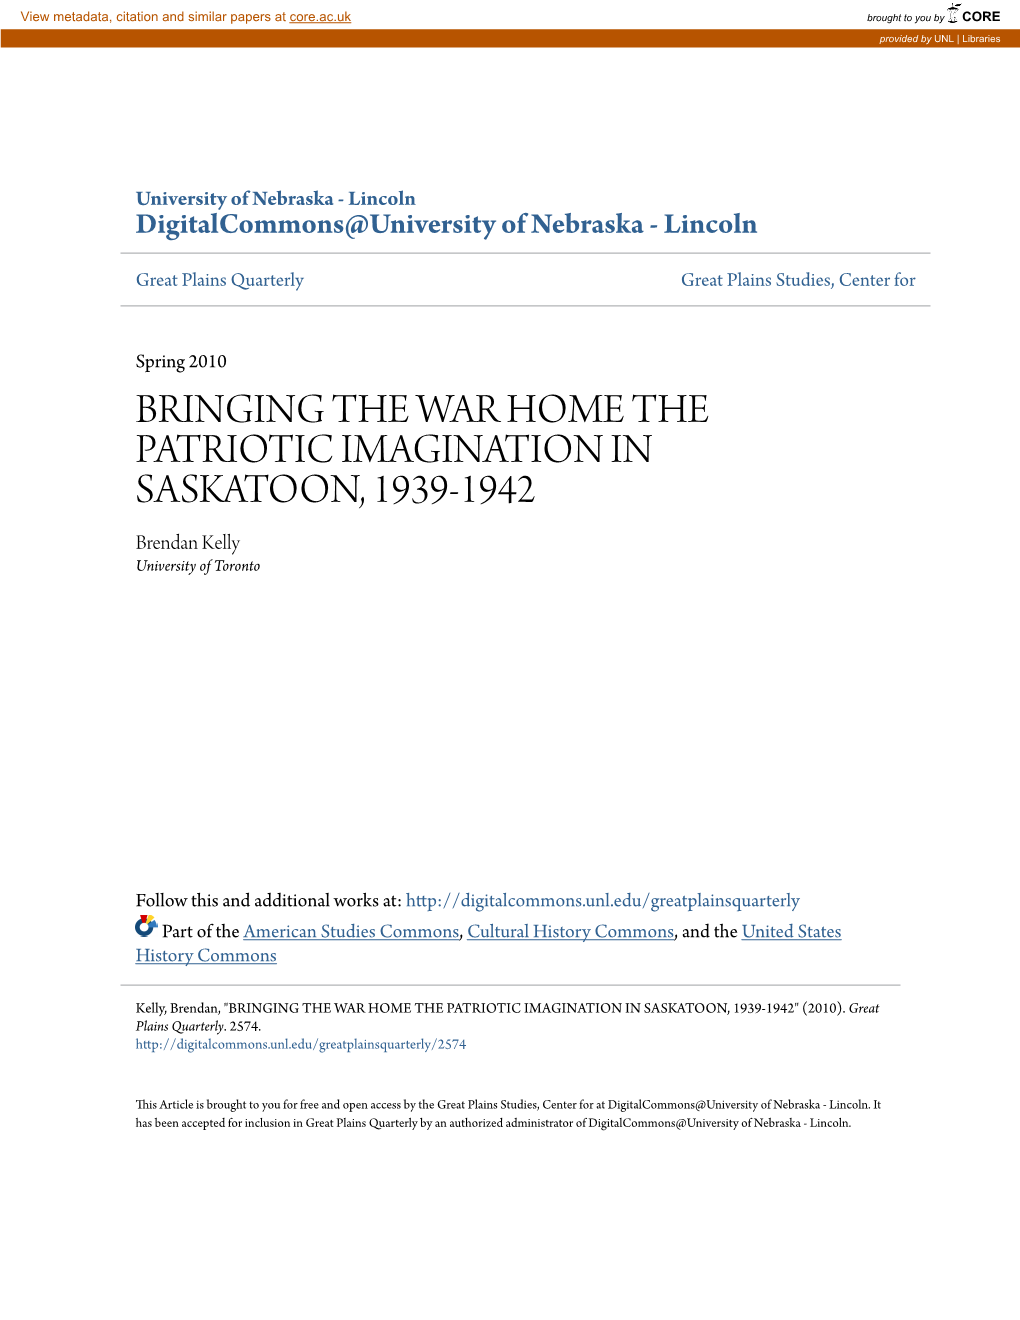 BRINGING the WAR HOME the PATRIOTIC IMAGINATION in SASKATOON, 1939-1942 Brendan Kelly University of Toronto